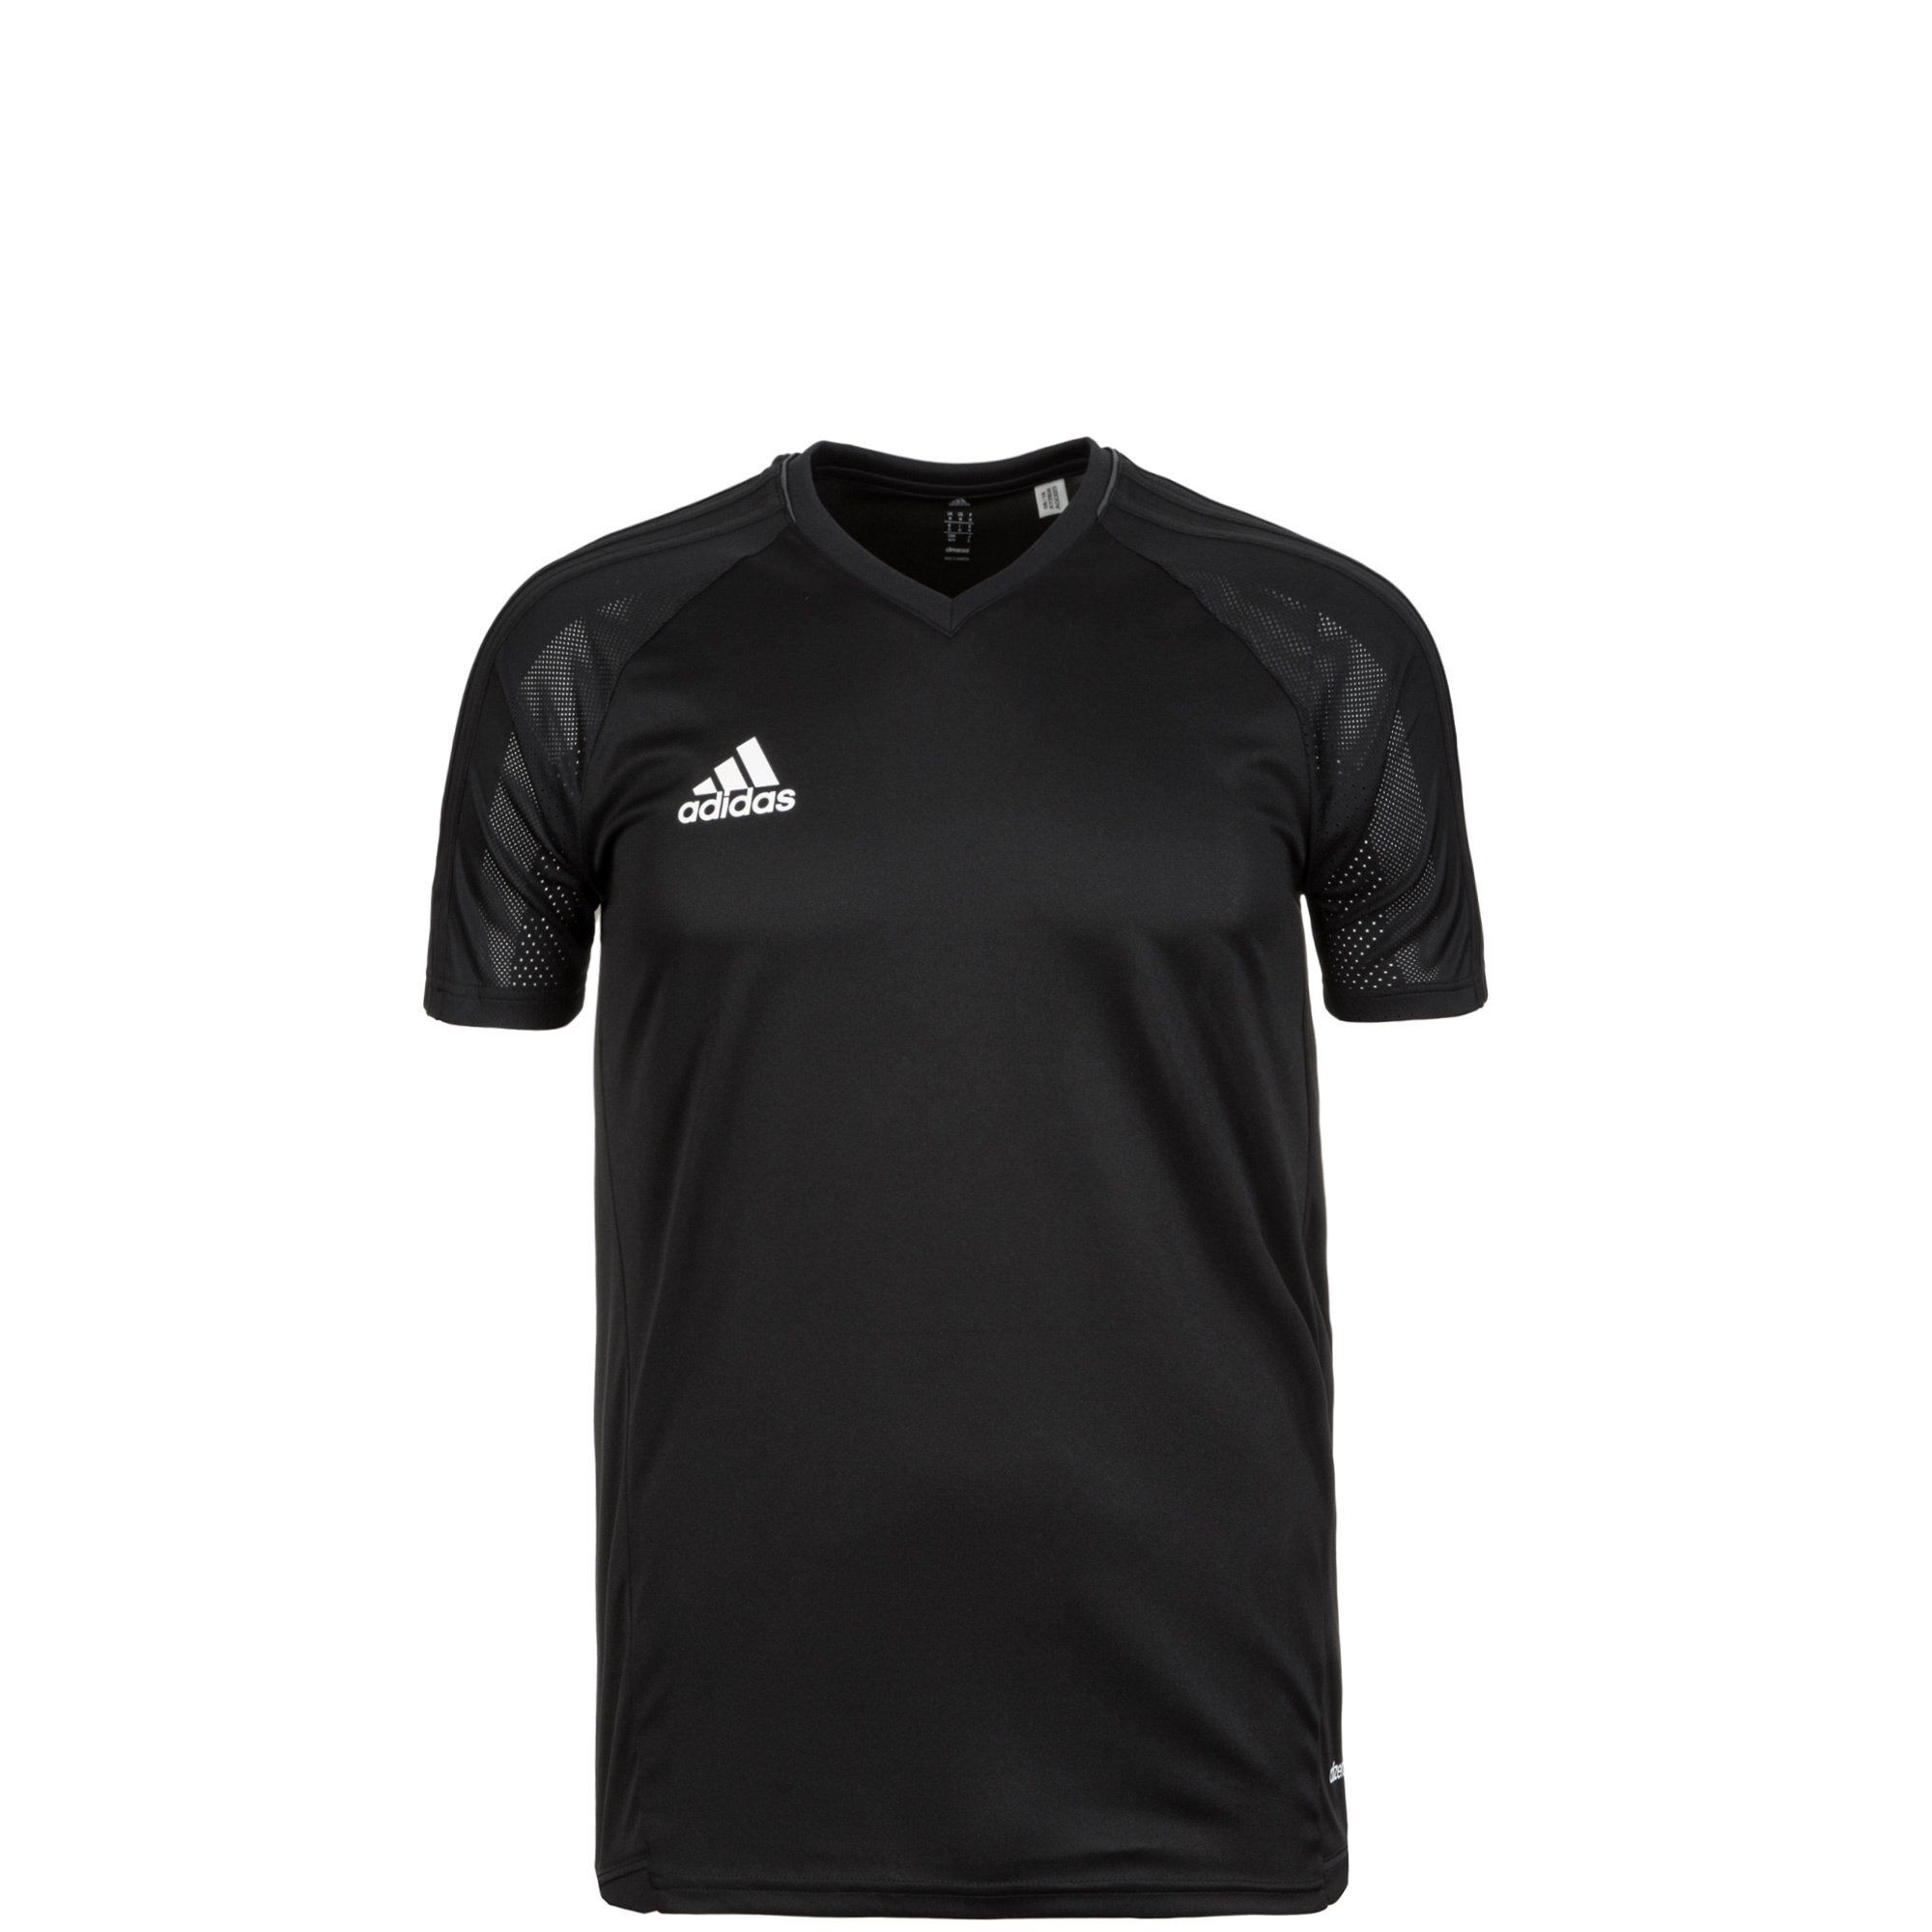 Adidas Performance Trainingsshirt »Tiro 17«, schwarz-weiß